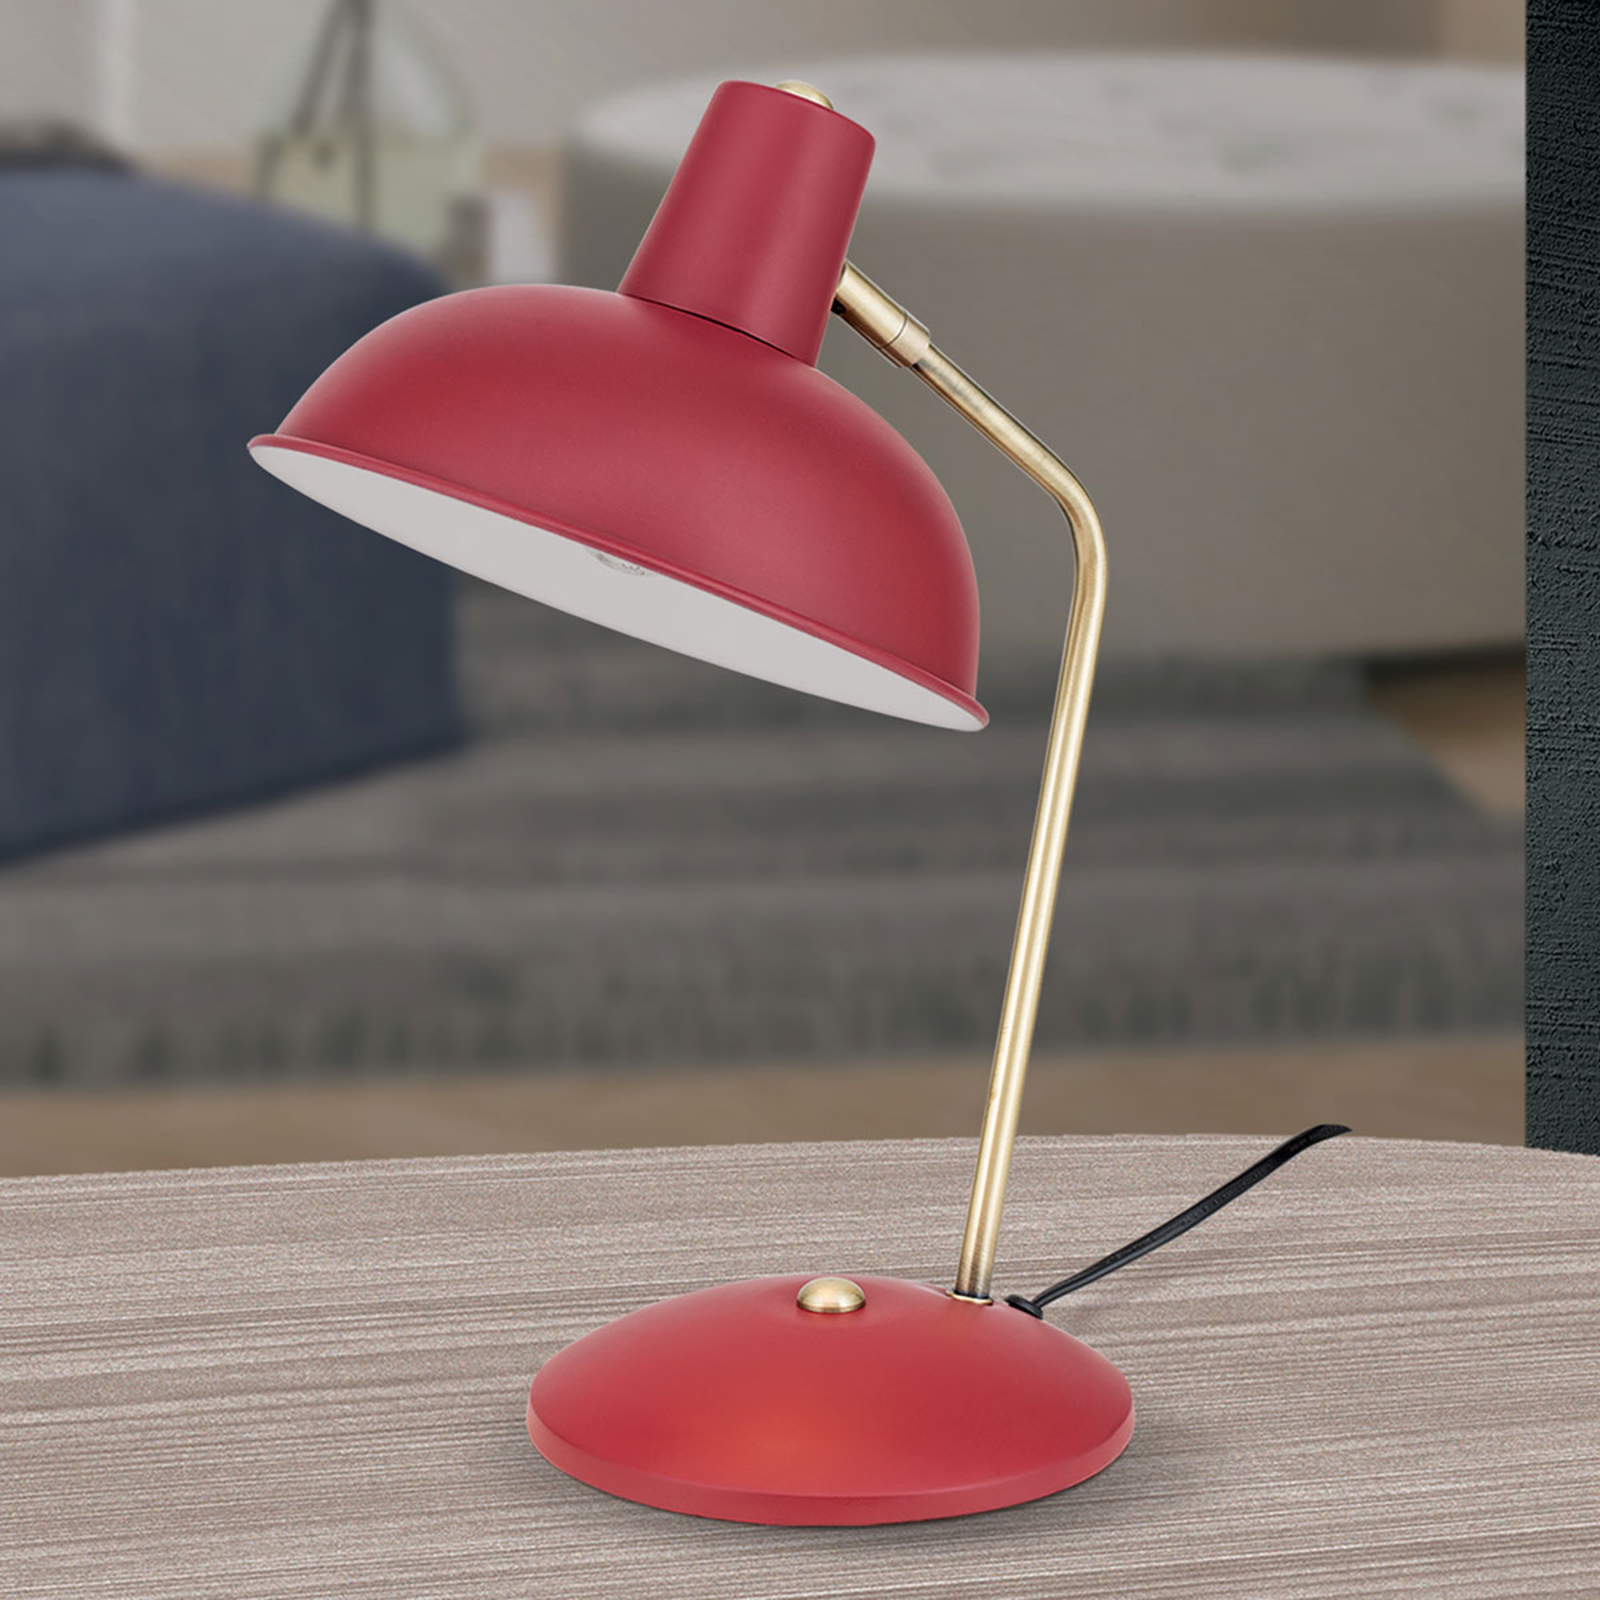 U vintage izgledu - crvena stolna lampa Fedra